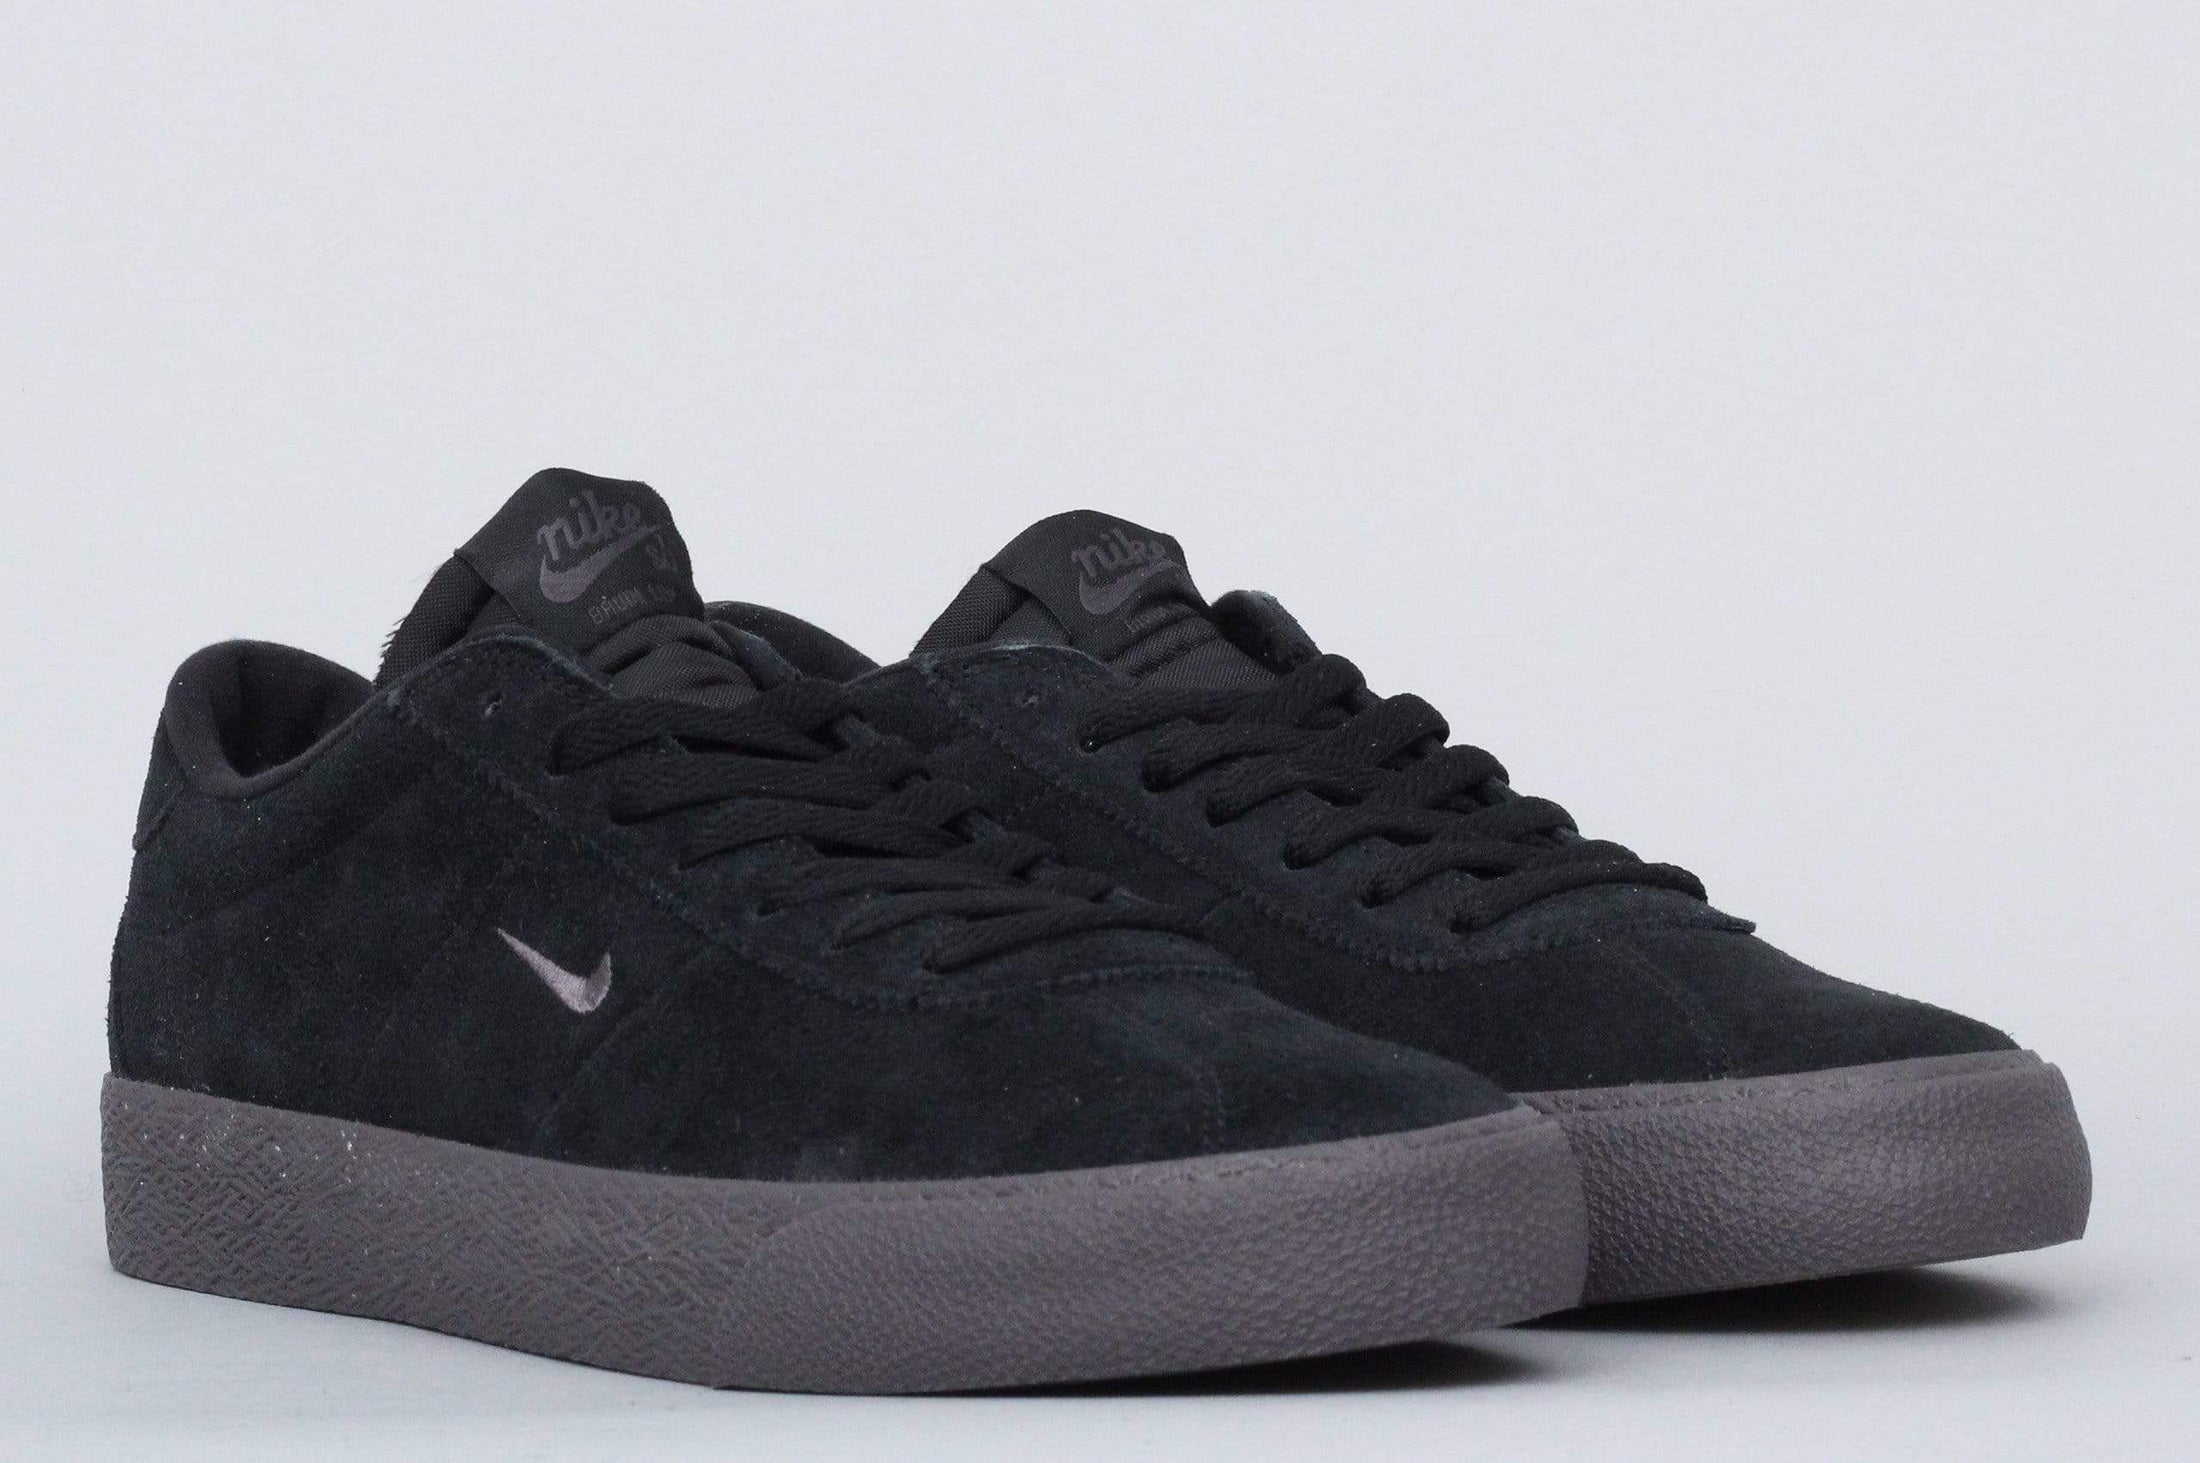 Nike SB Bruin Shoes Black / Thunder Grey